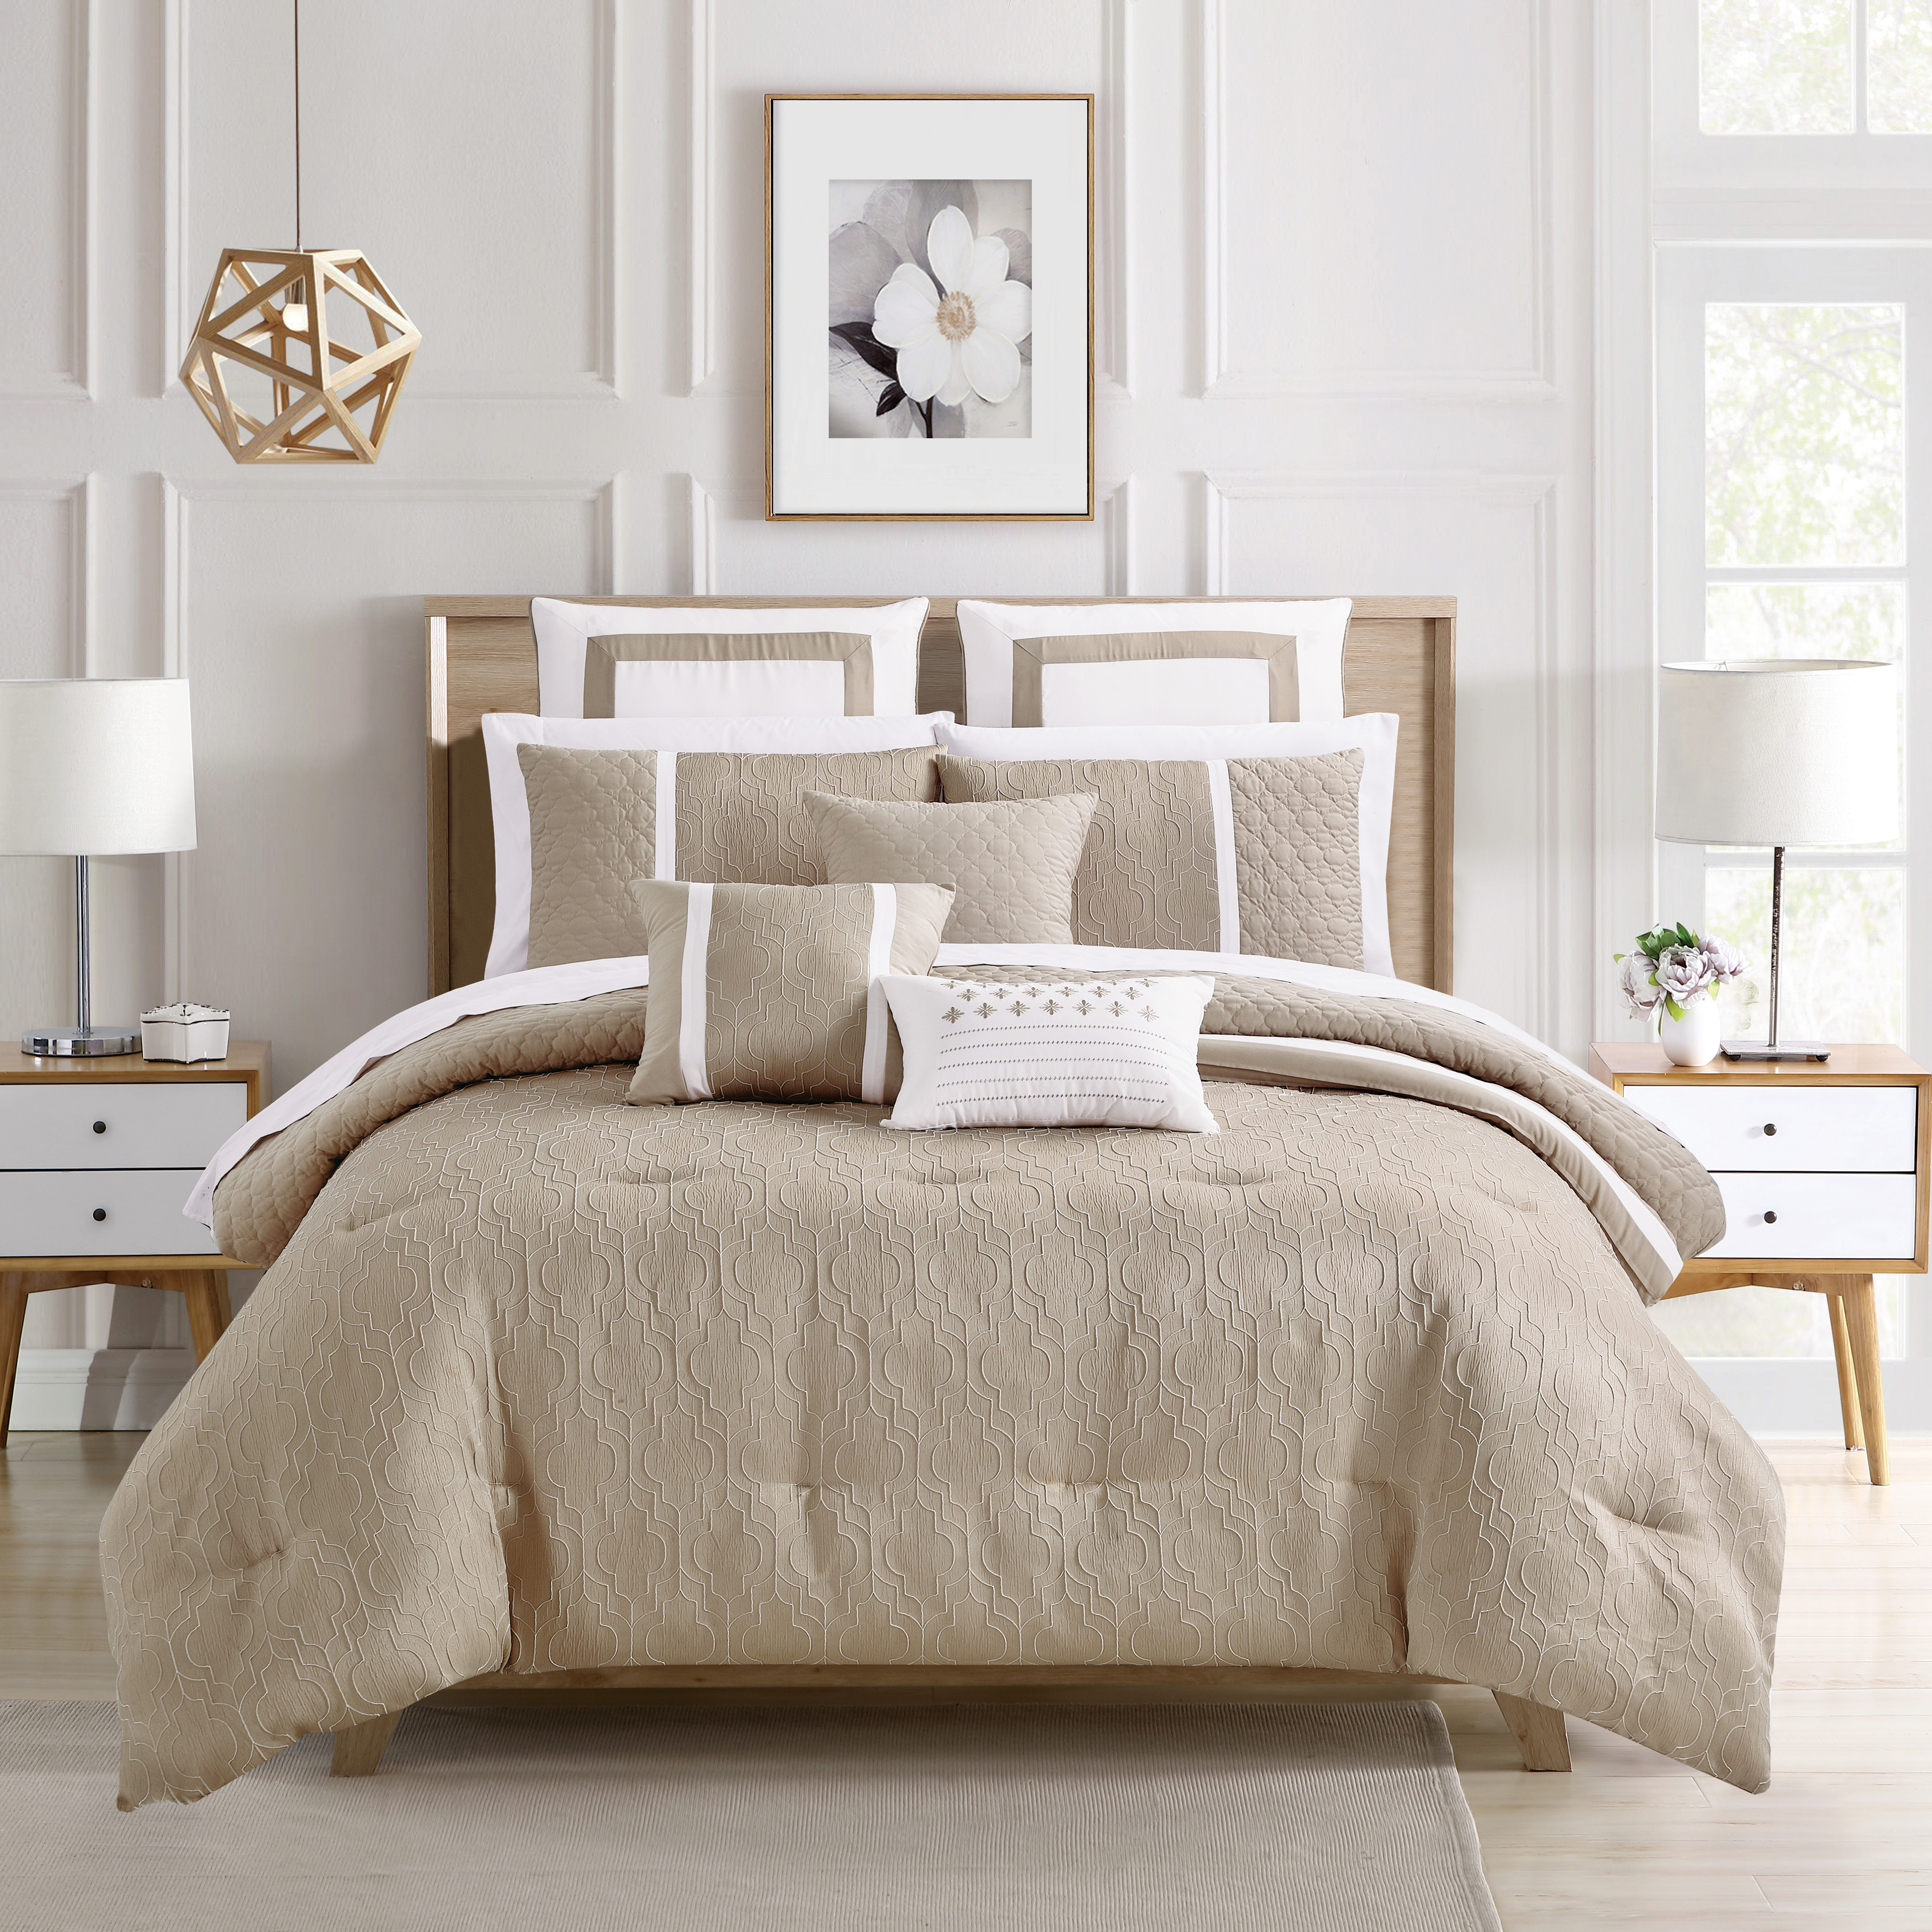 Arlow 8 Piece Comforter Set Jacquard Geometric Quilted Pattern Design Bedding - Beige, King